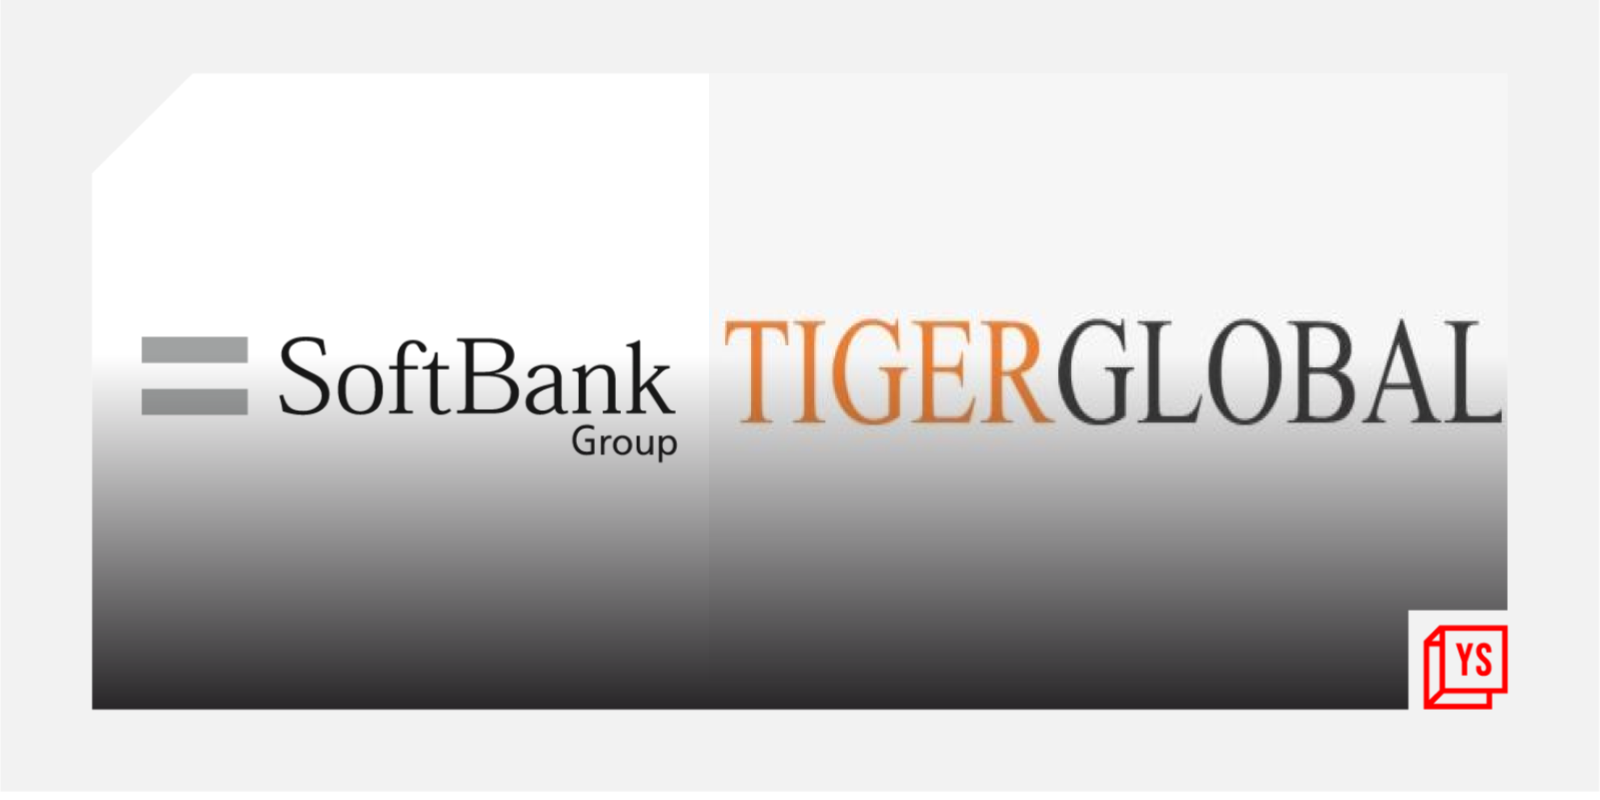 SoftBank, Tiger Global face setbacks as markets tumble